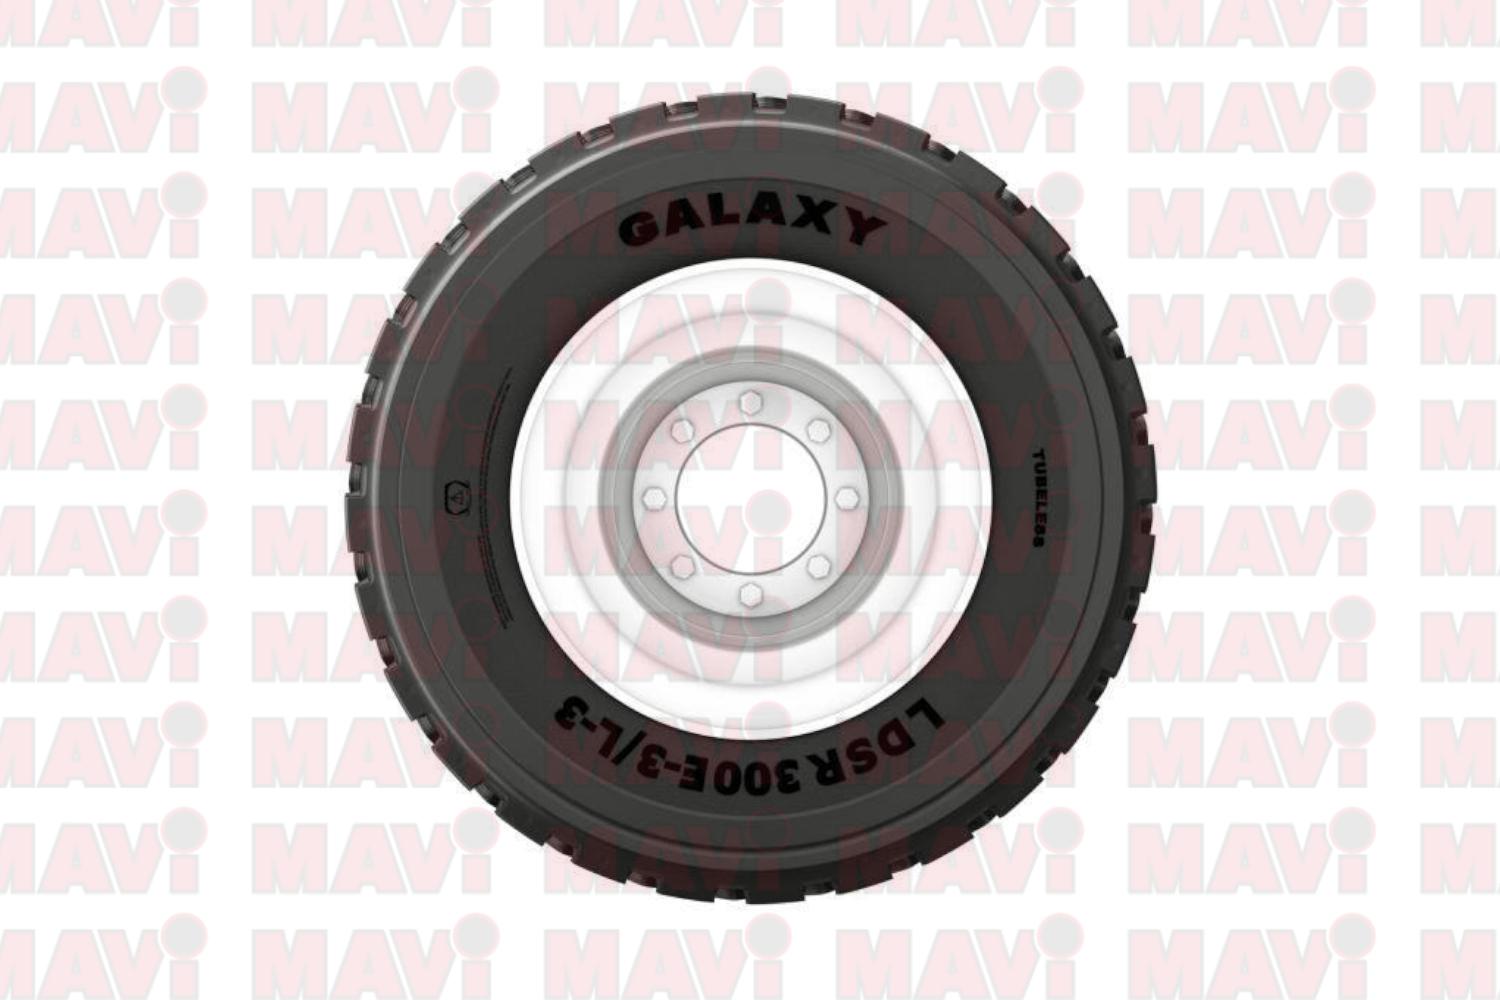 Anvelopa industriala Galaxy, 17.5 R25, LDSR 300, TL, radiala # 299694